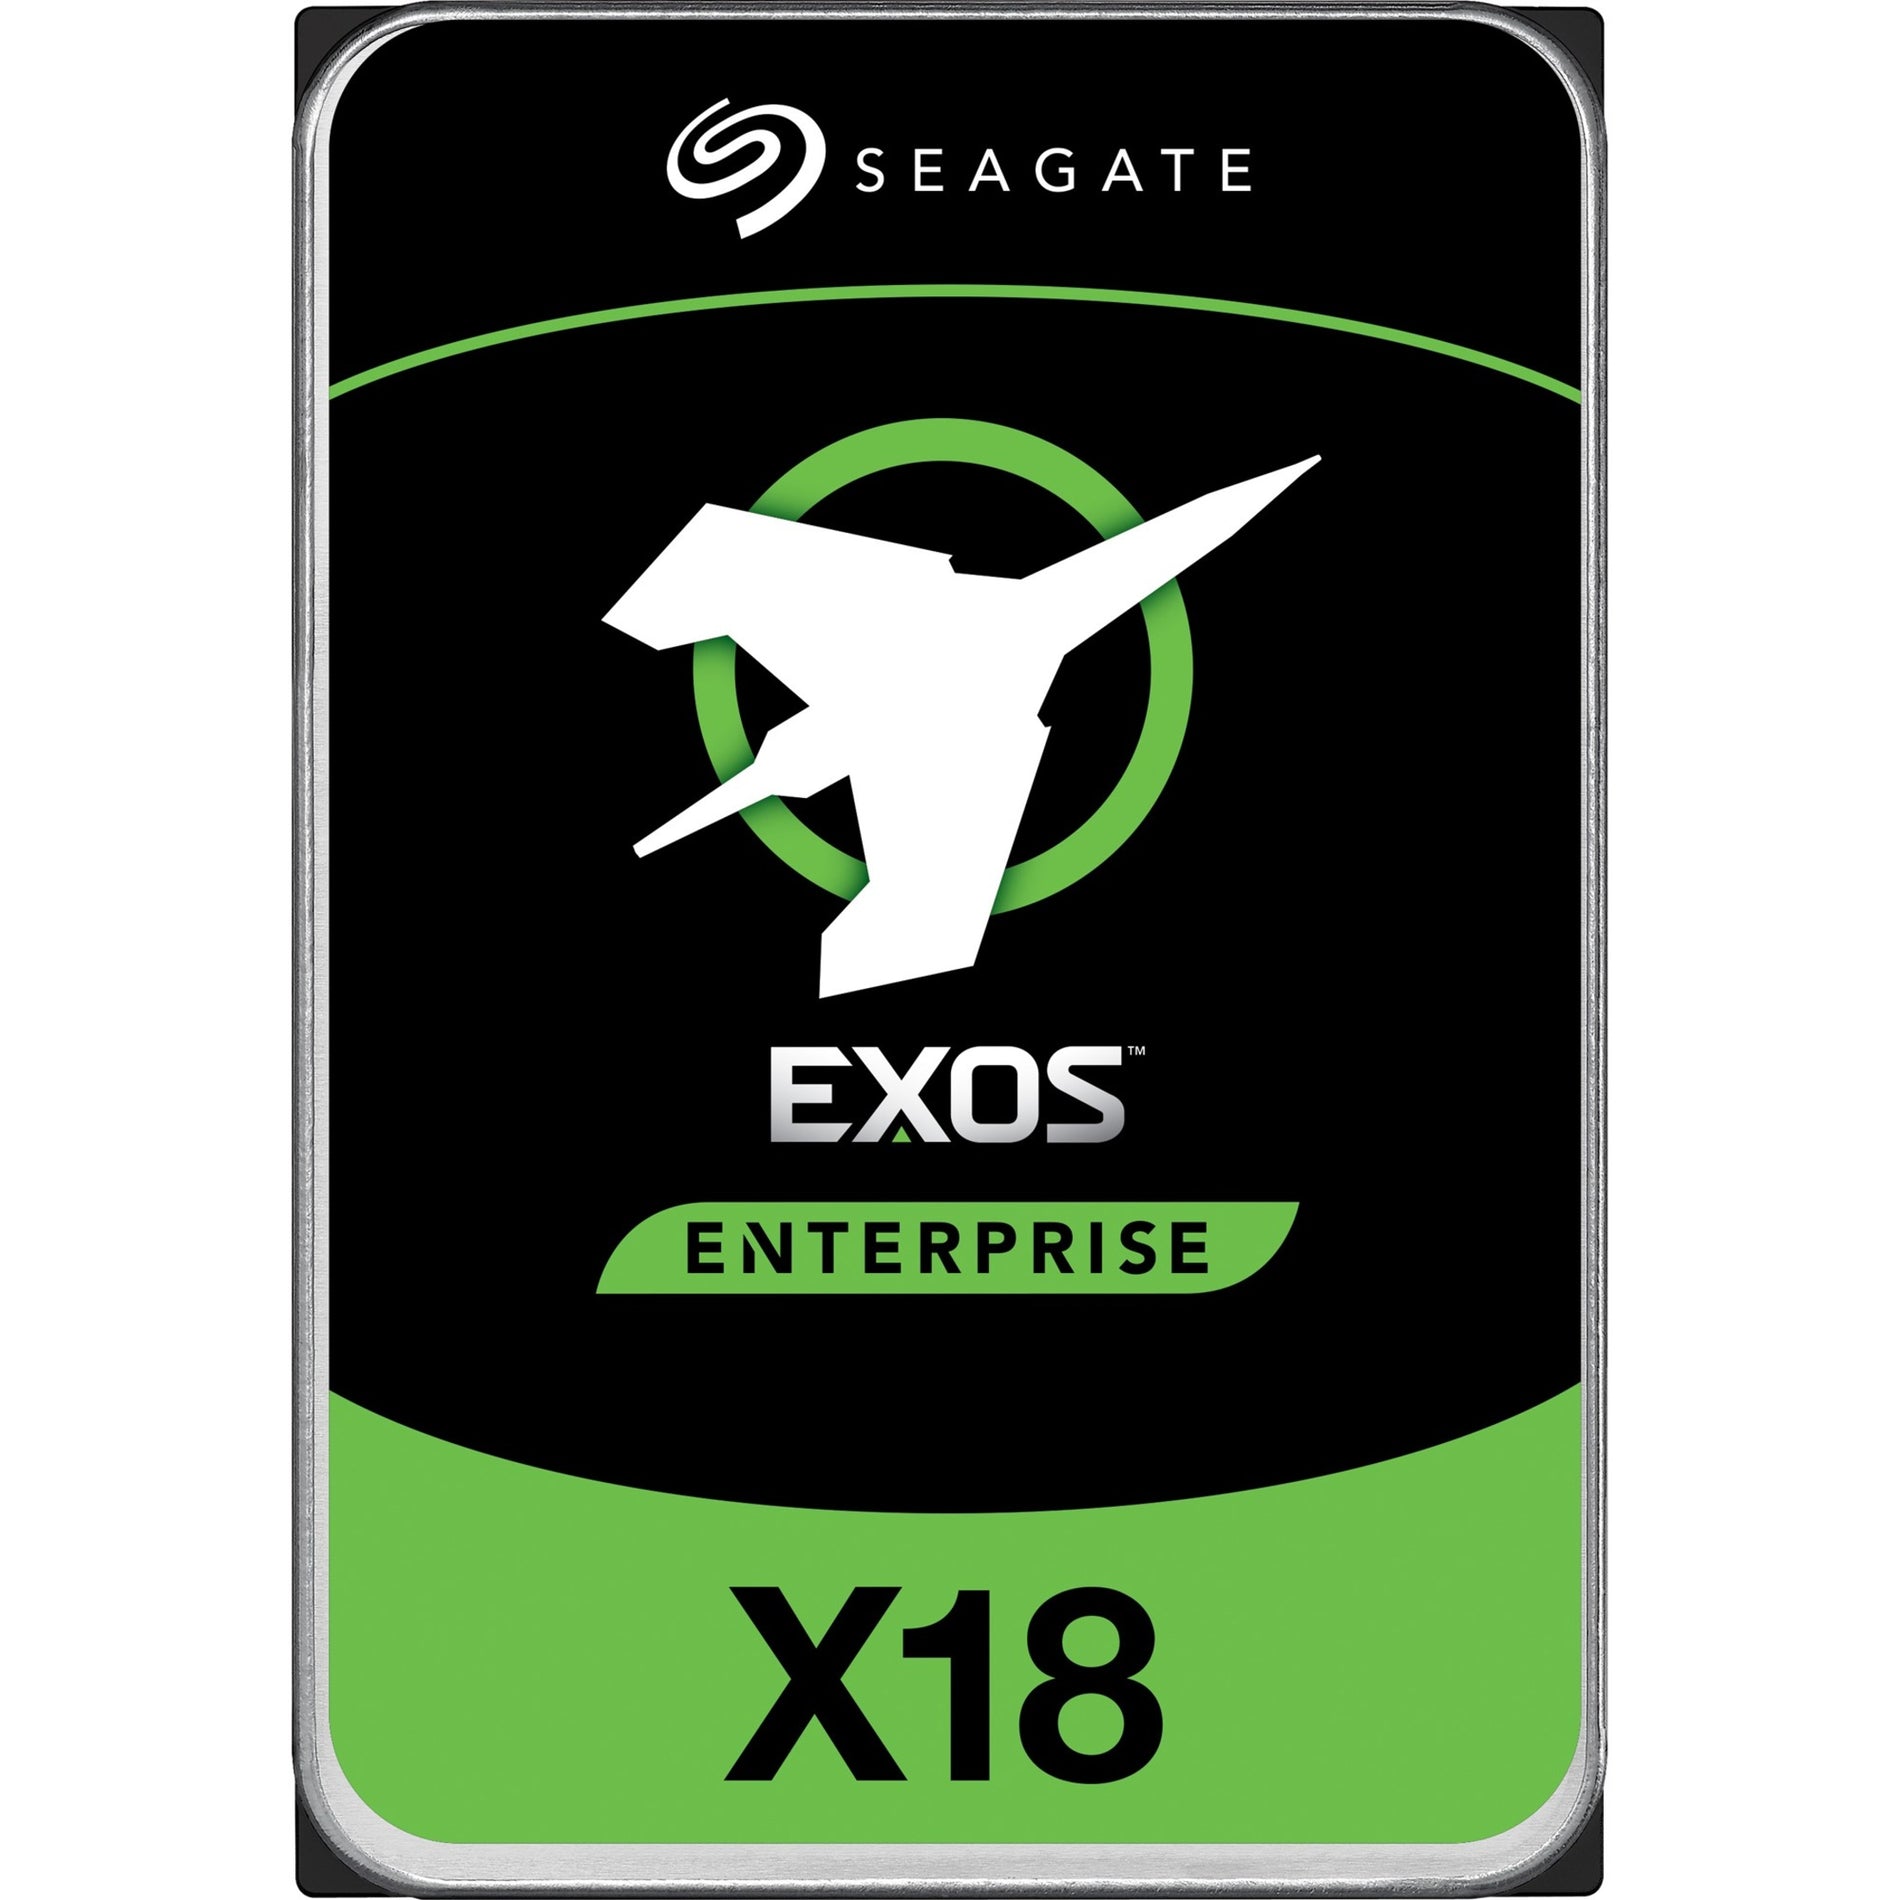 Seagate ST12000NM004J Exos X18 Hard Drive, 12TB Storage Capacity, 7200 RPM, 512e/4Kn, 5 Year Warranty